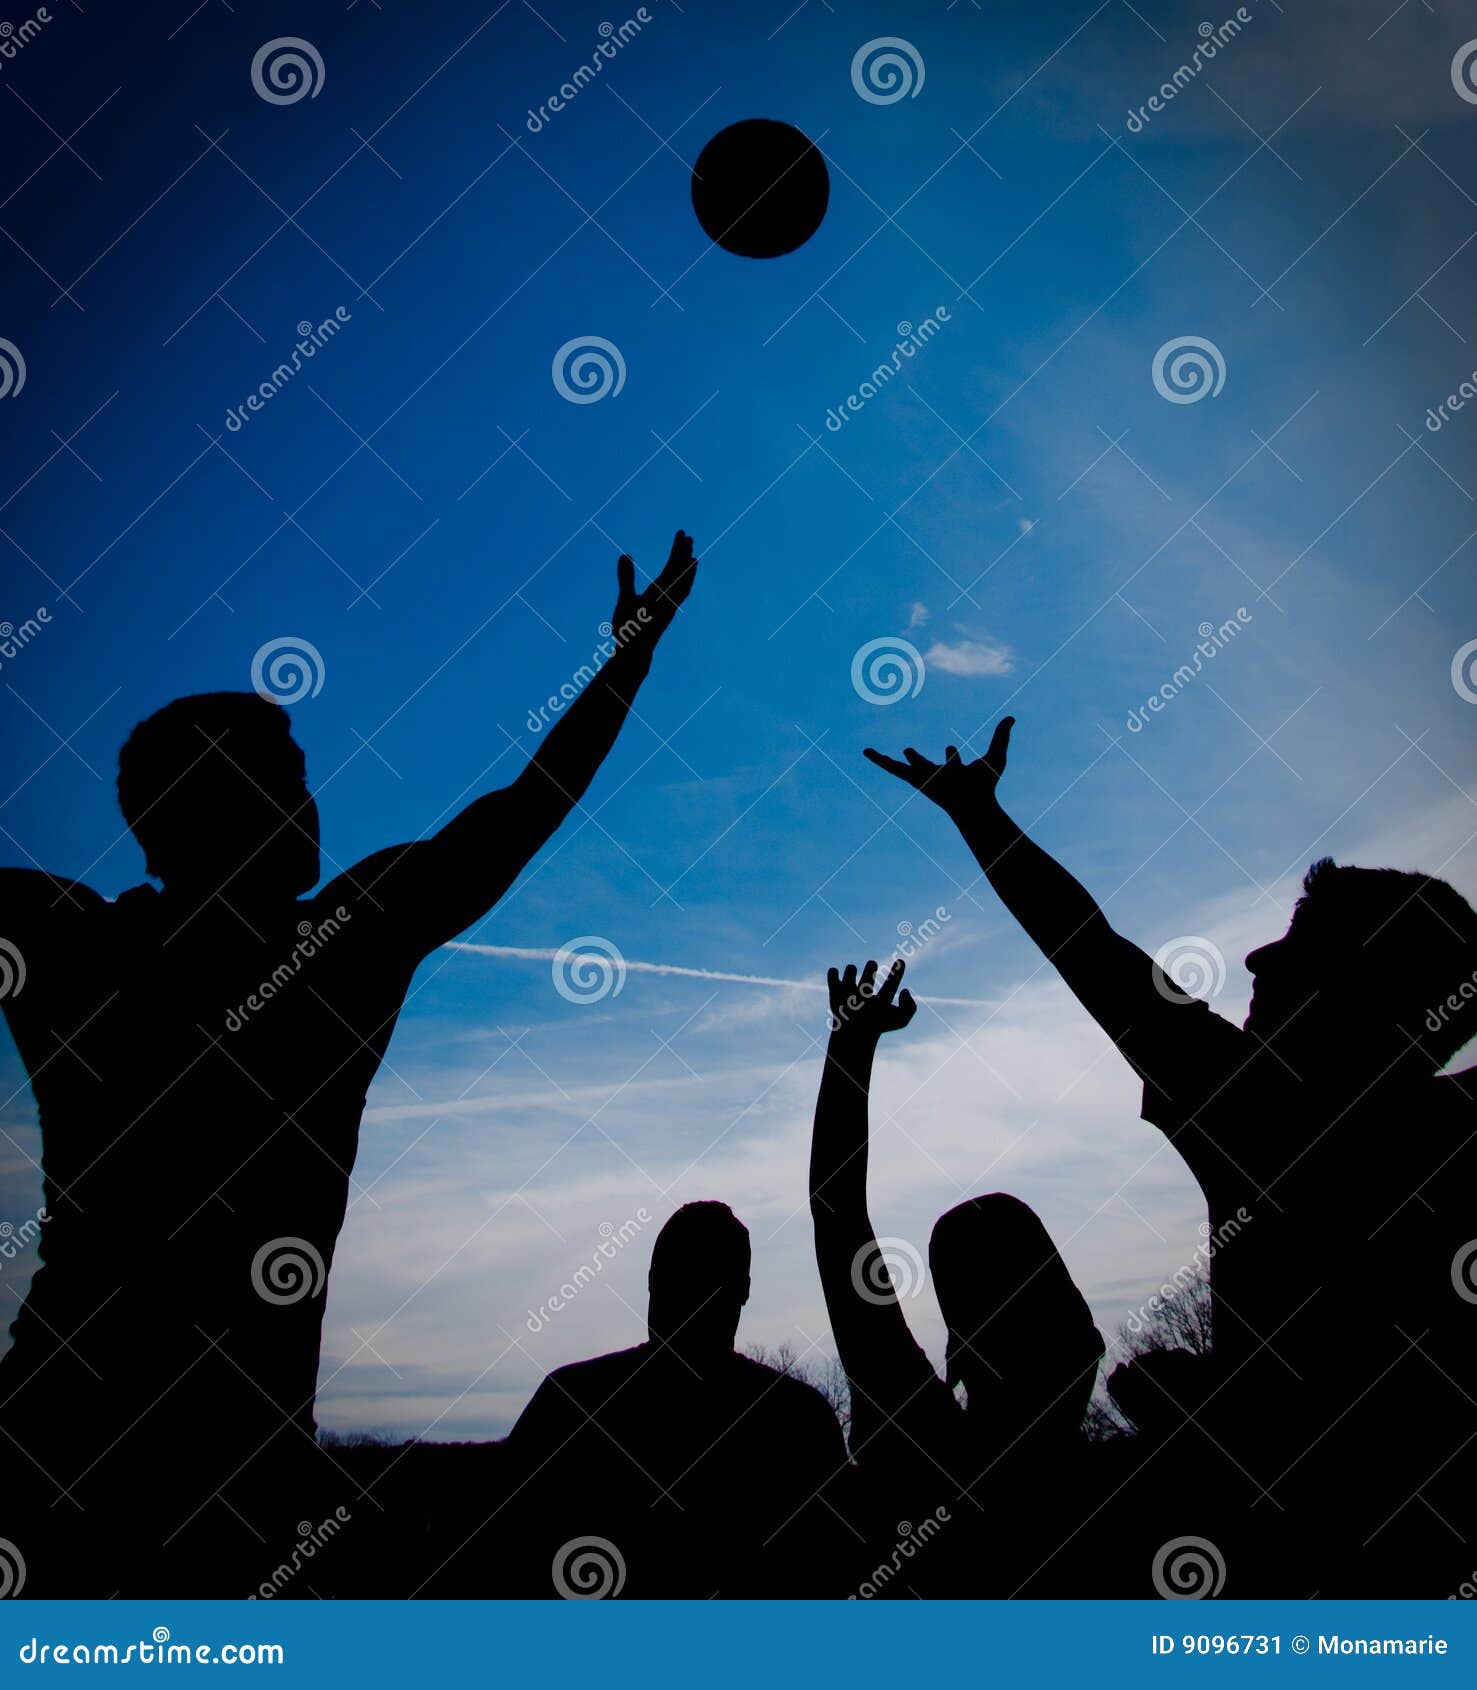 Basketball Players On Court Stock Image - Image of ball, arms: 9096731